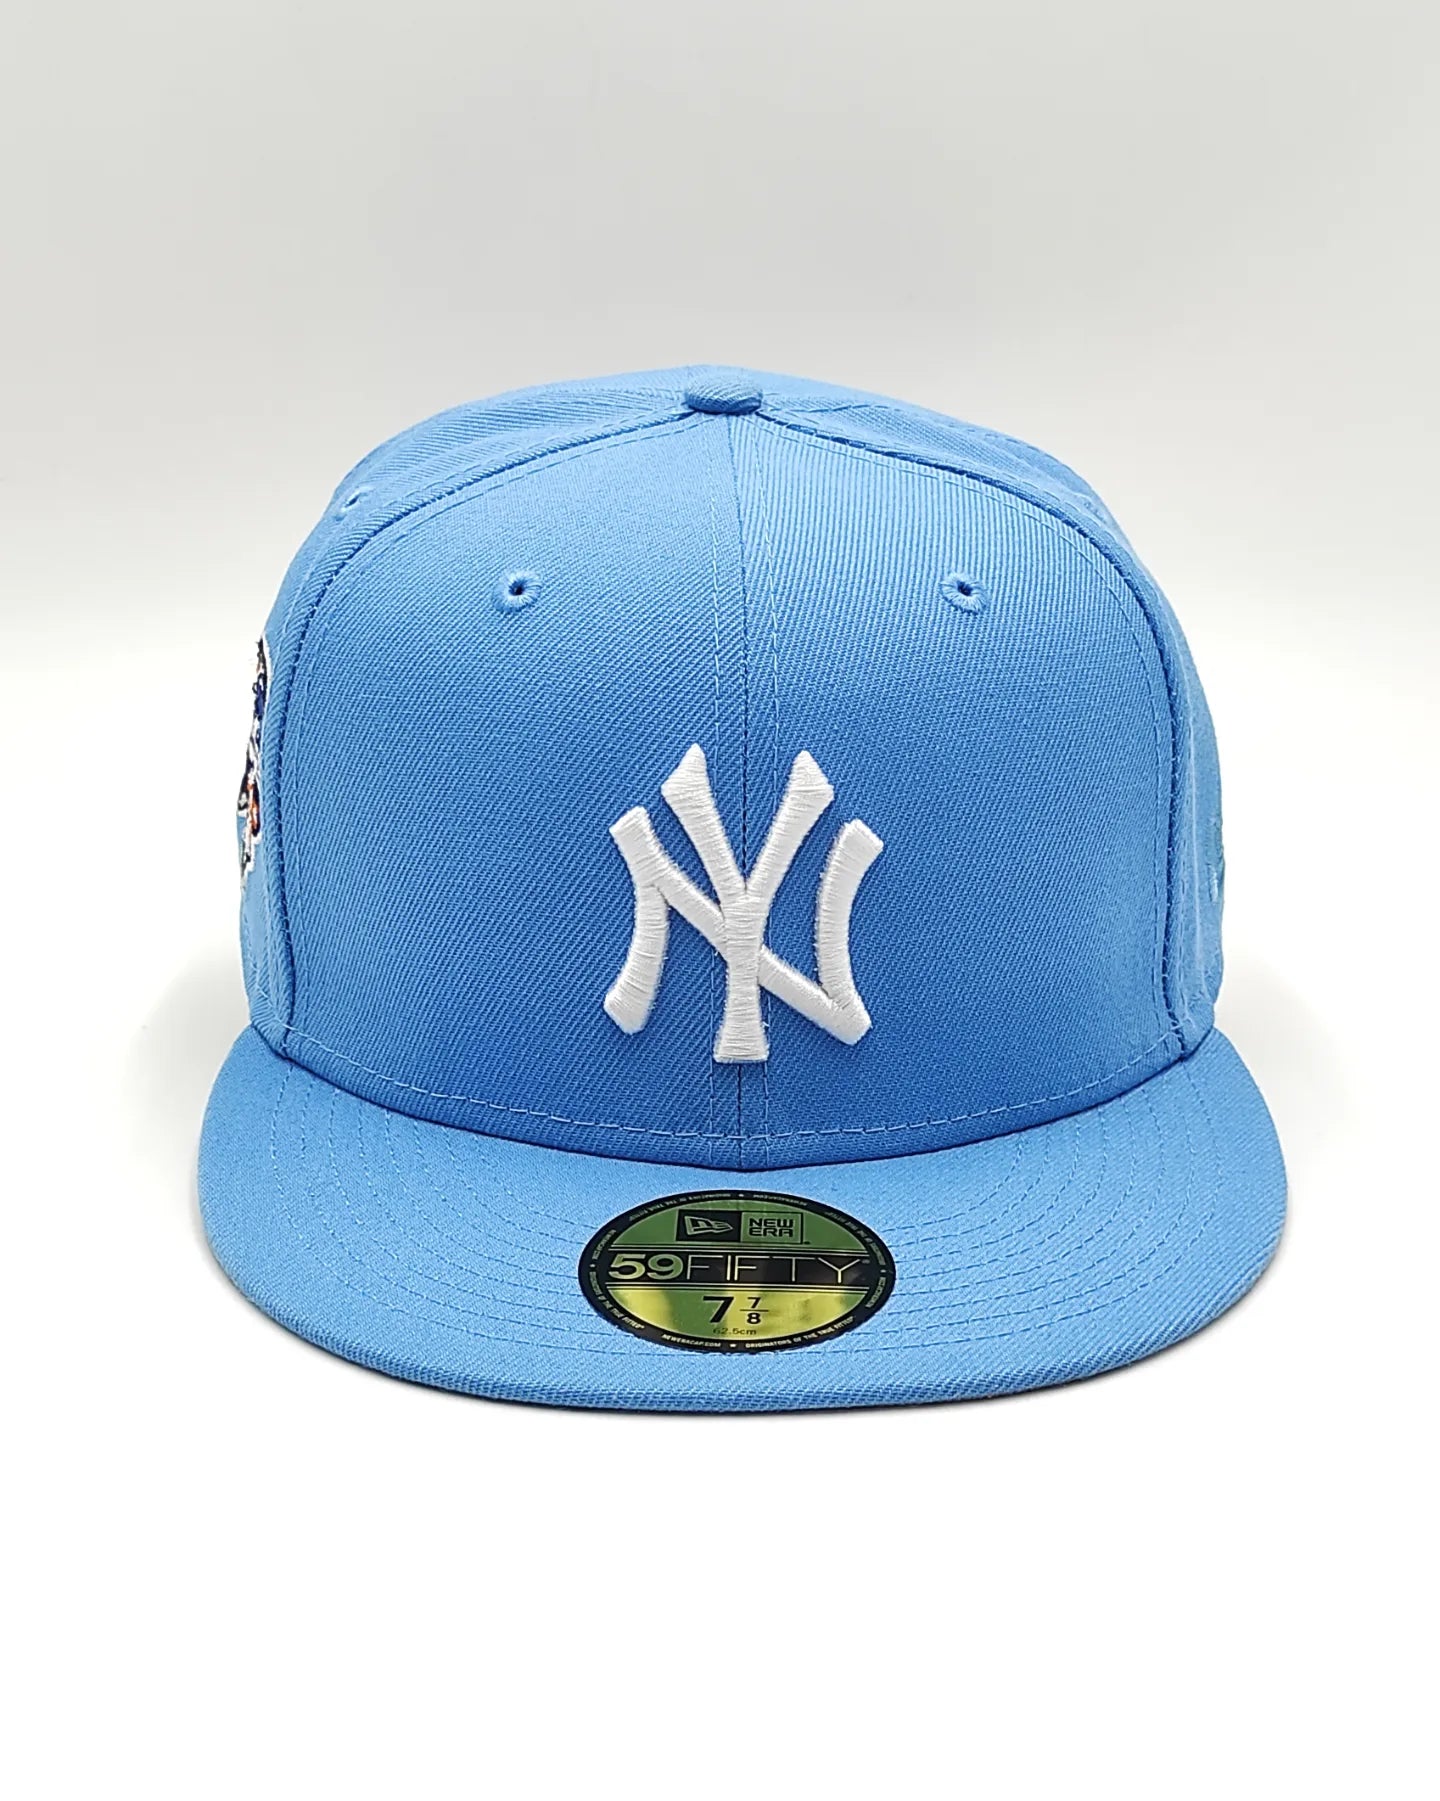 New Era New York Yankees 59 fifty sky blue world series